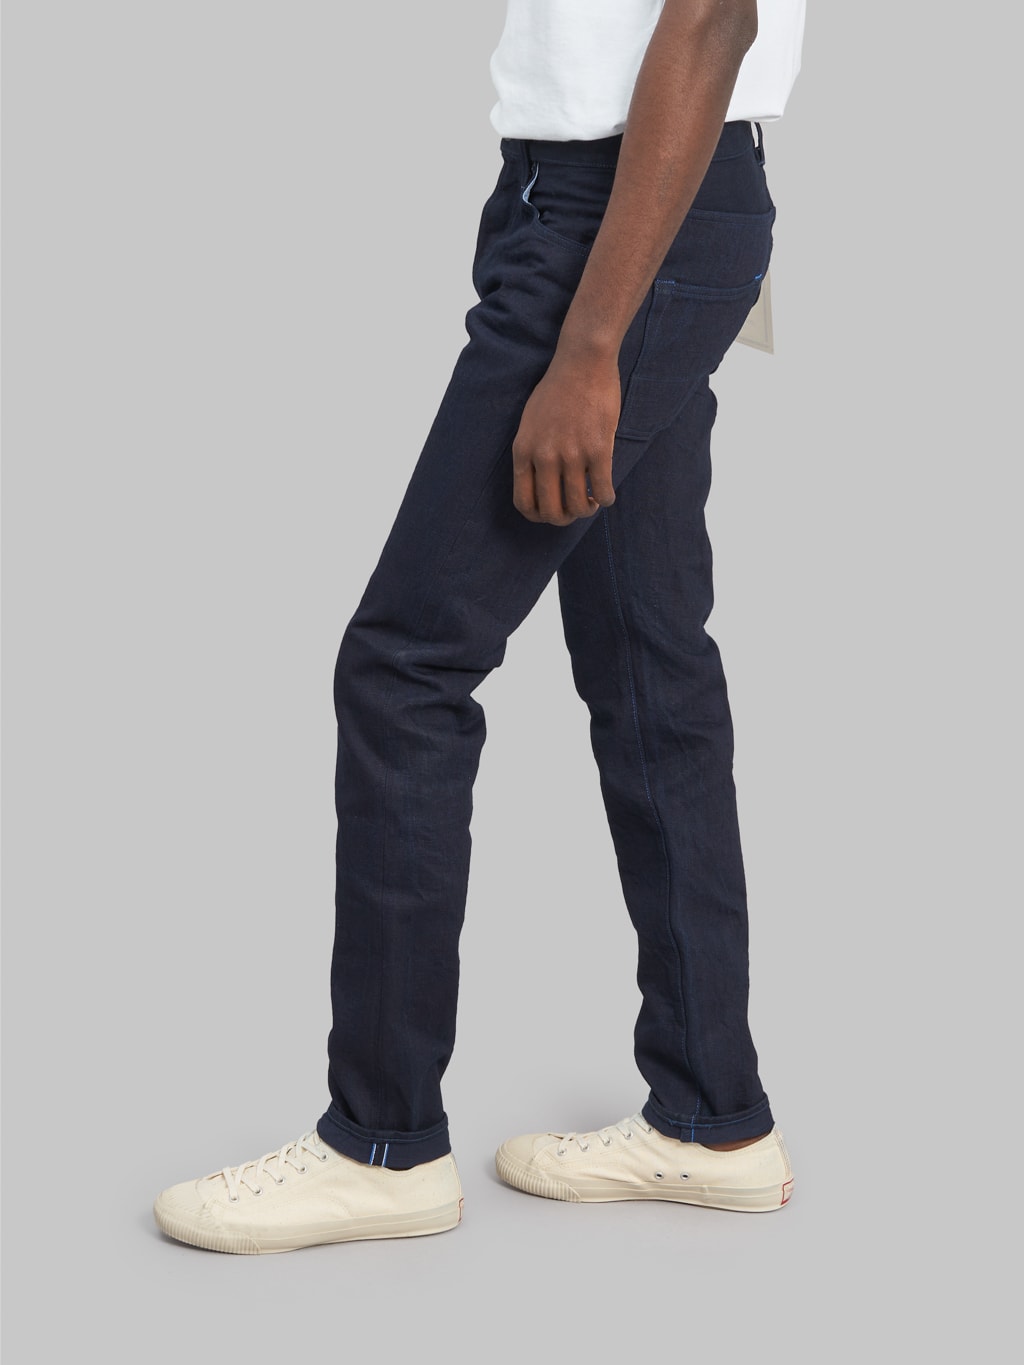 Tanuki IDHT "Indigo x Indigo" 15oz High Tapered Jeans